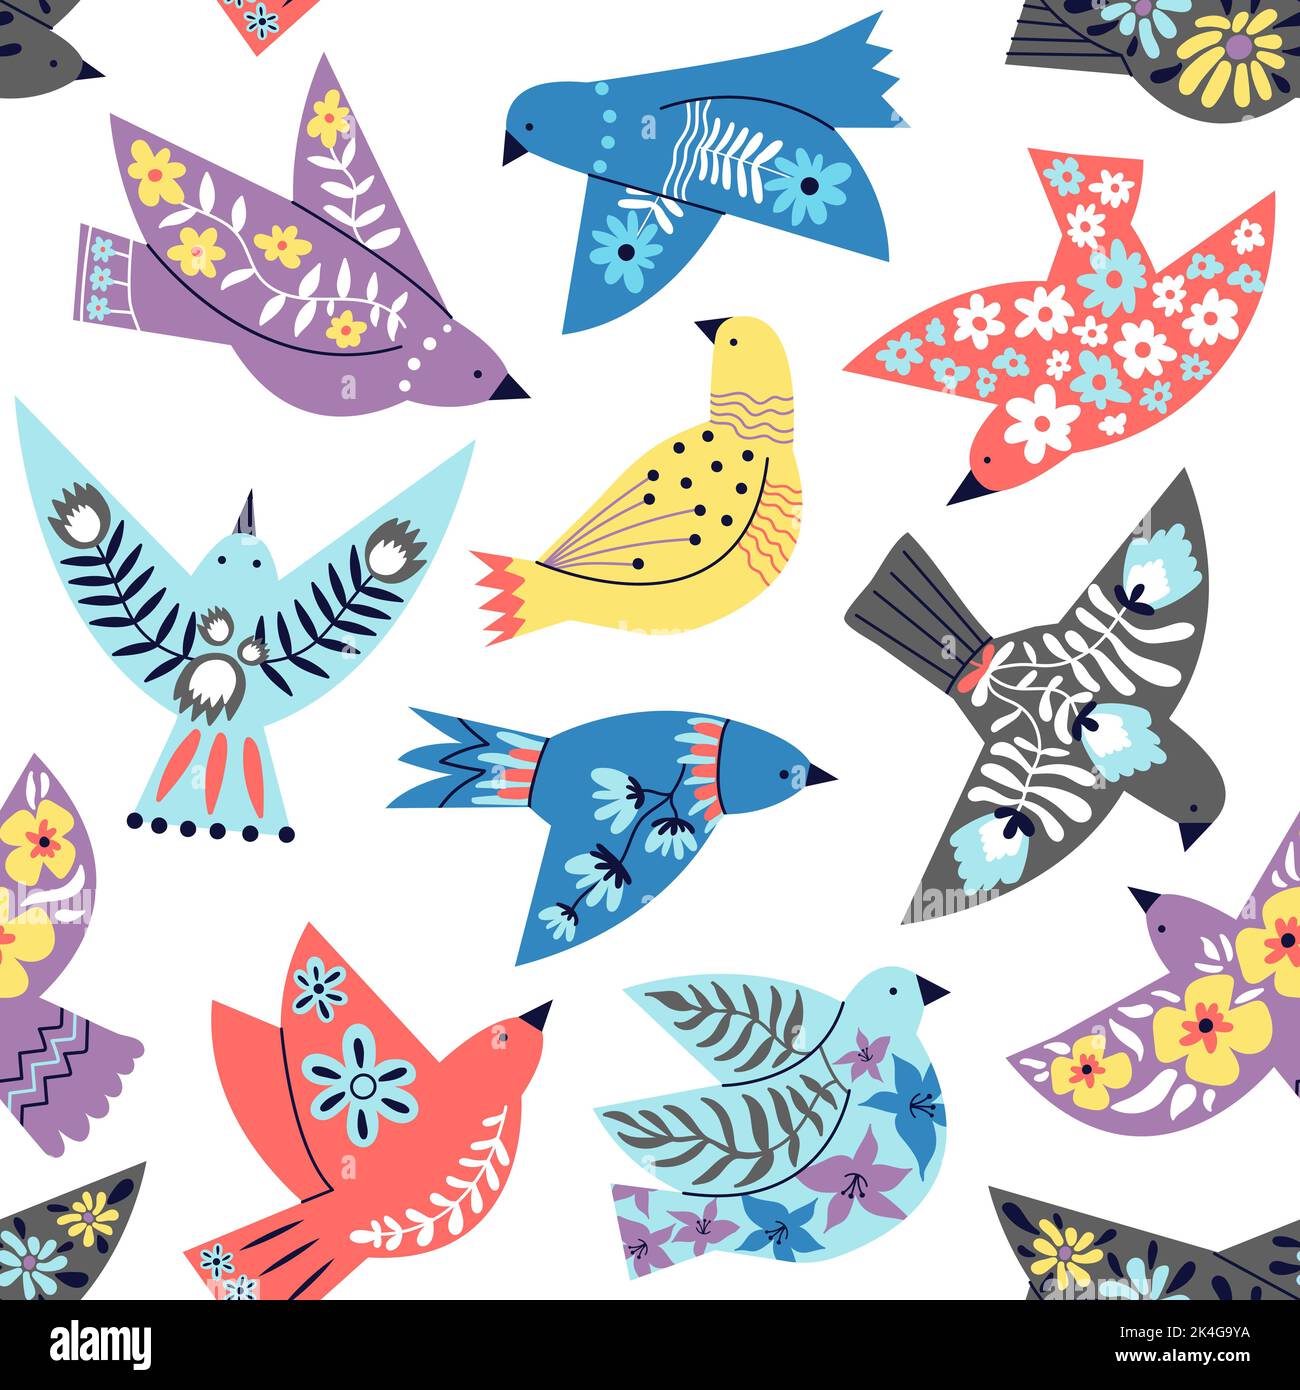 Birds seamless pattern. Ethnic folk abstract flying bird wallpaper. Decorative flat dove or seagull, scandinavian floral decent vector fabric print. I Stock Vector